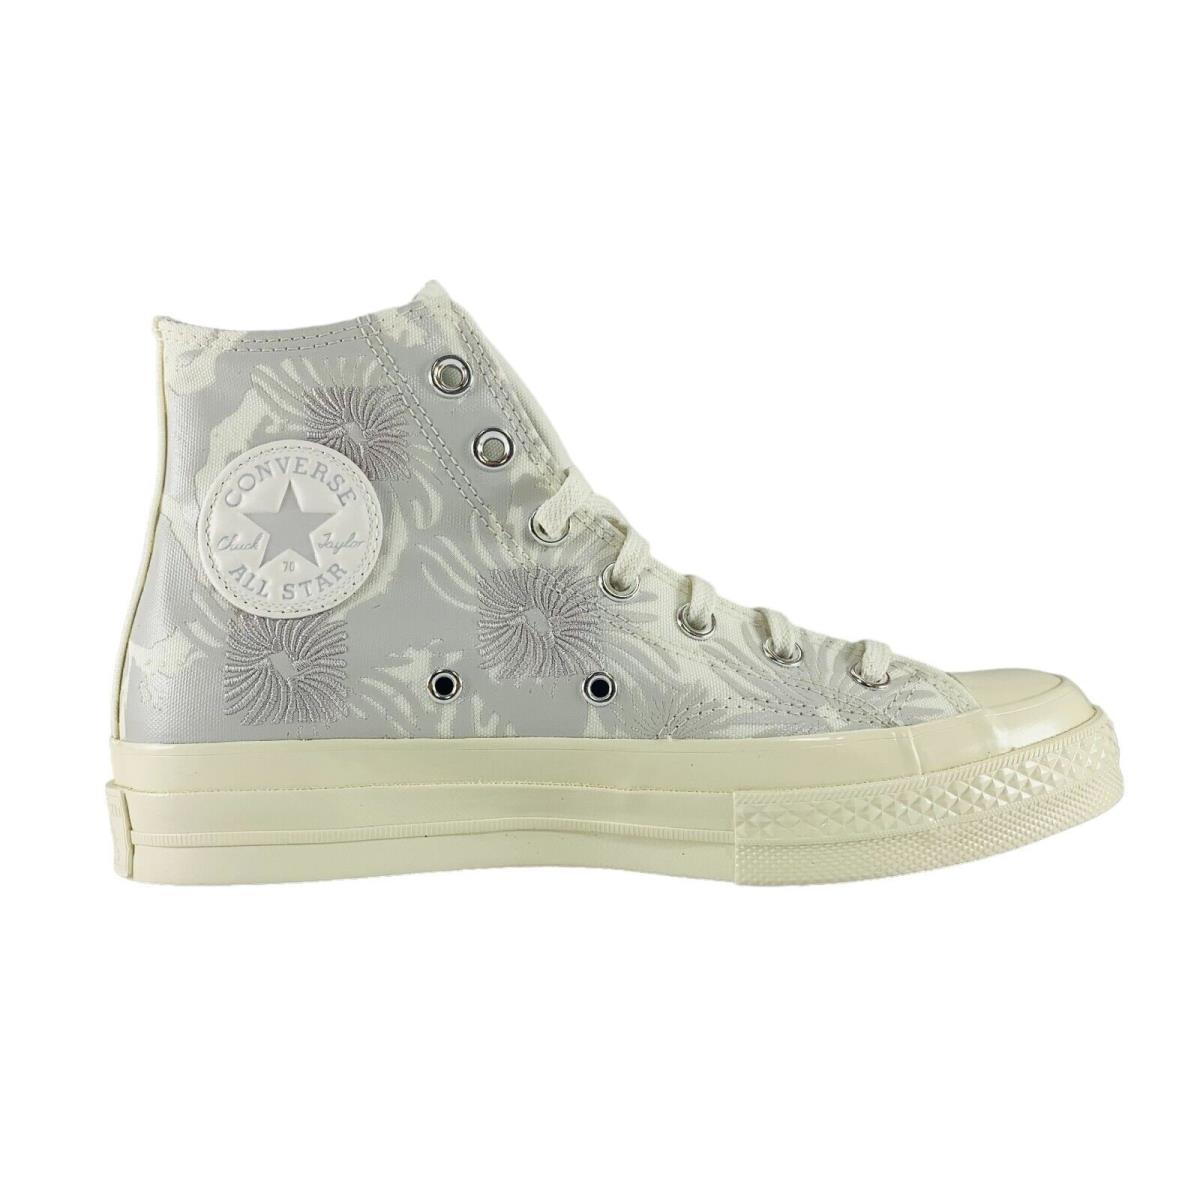 Converse Chuck 70 Hi Floral Print Grey Cream Sneakers Women`s Shoes A04368C